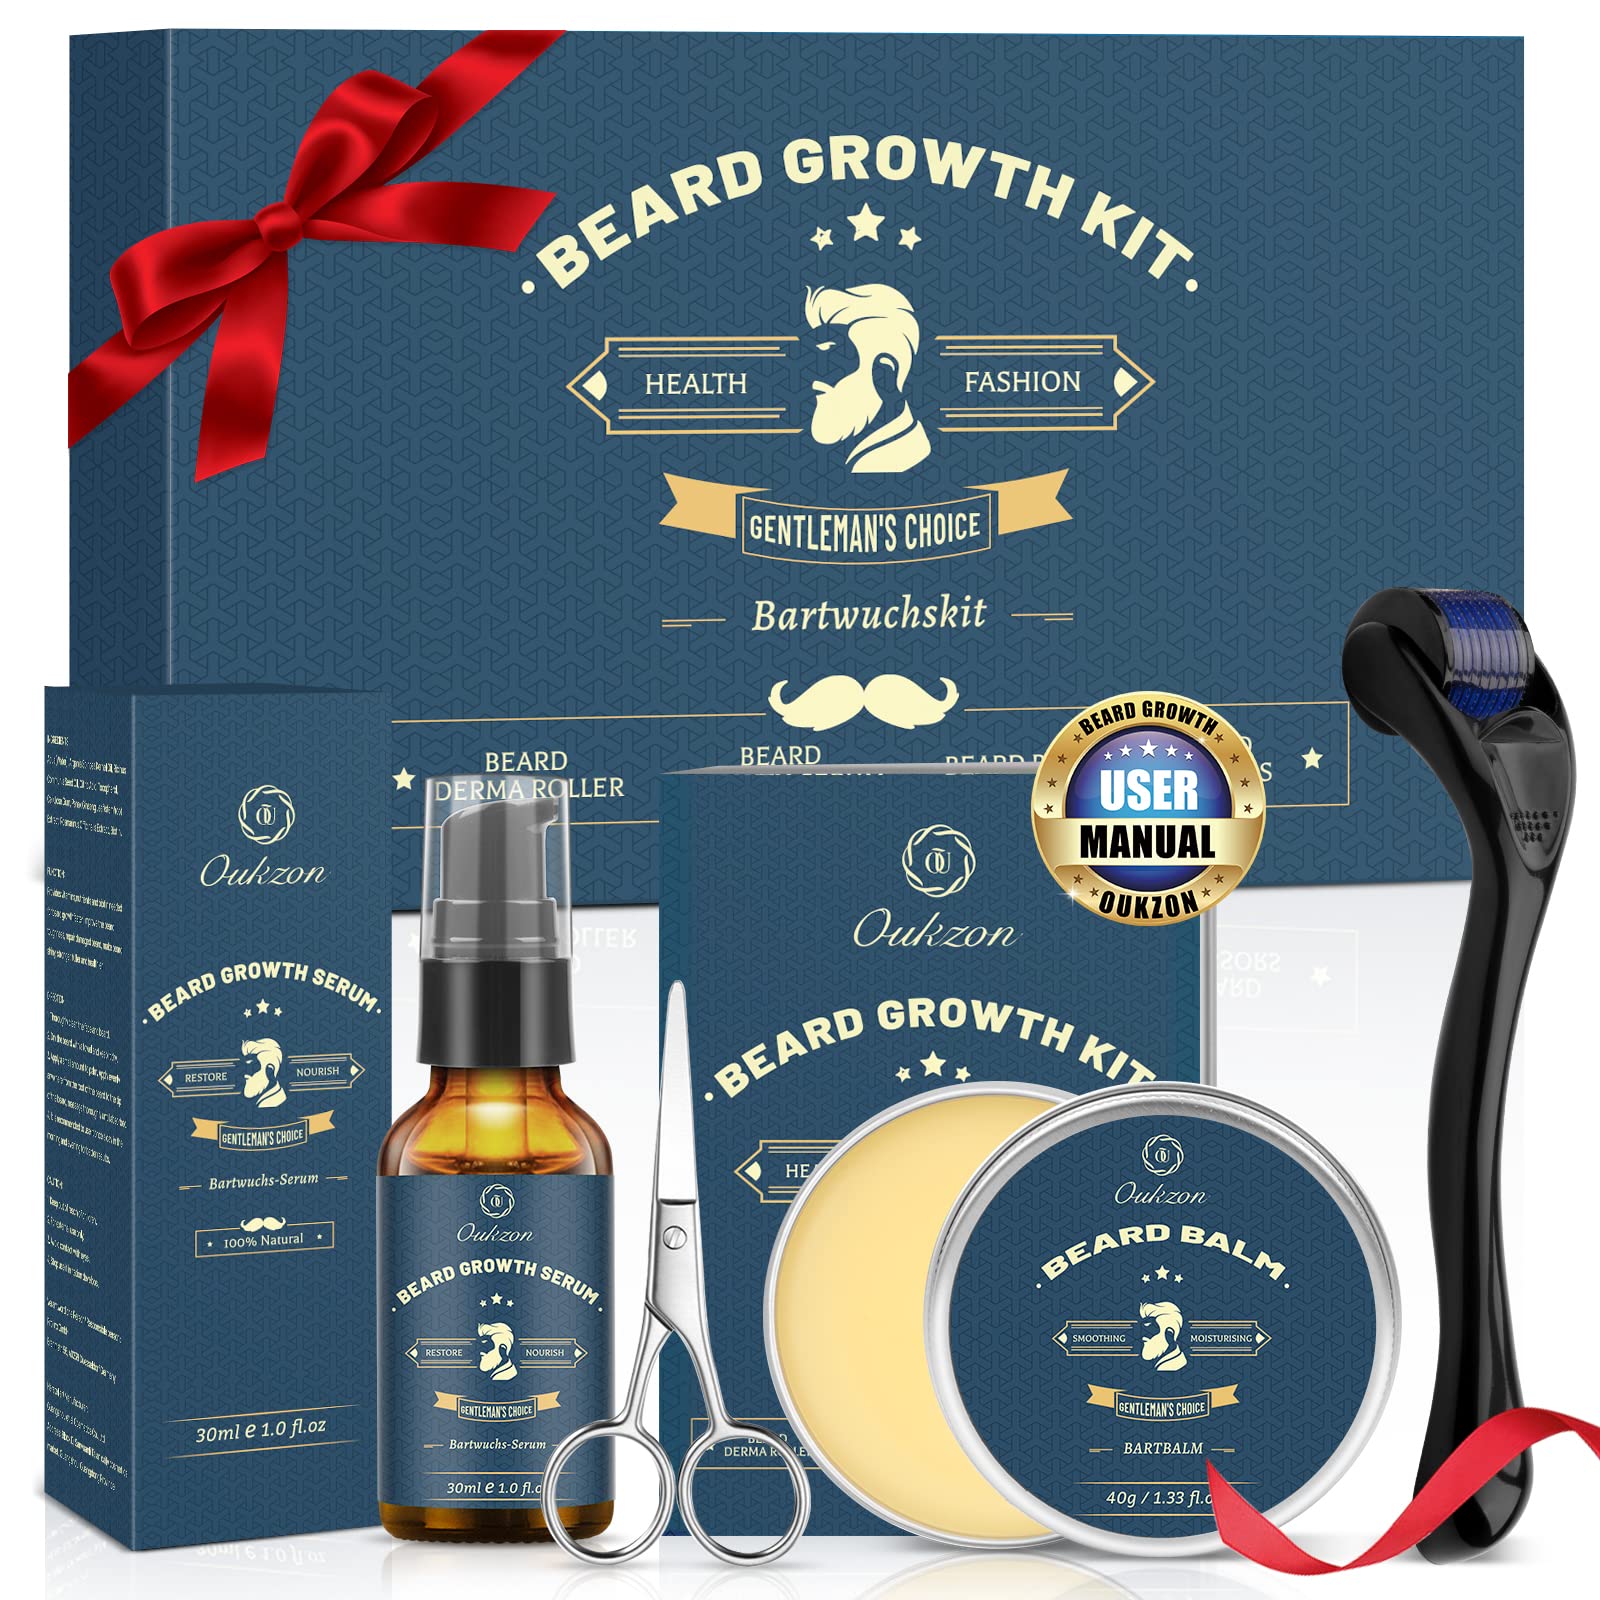 Grooming Roller for Beard Growth - Beard Beard Growth Growth Men Kit Oukzon Beard Oil for Kit